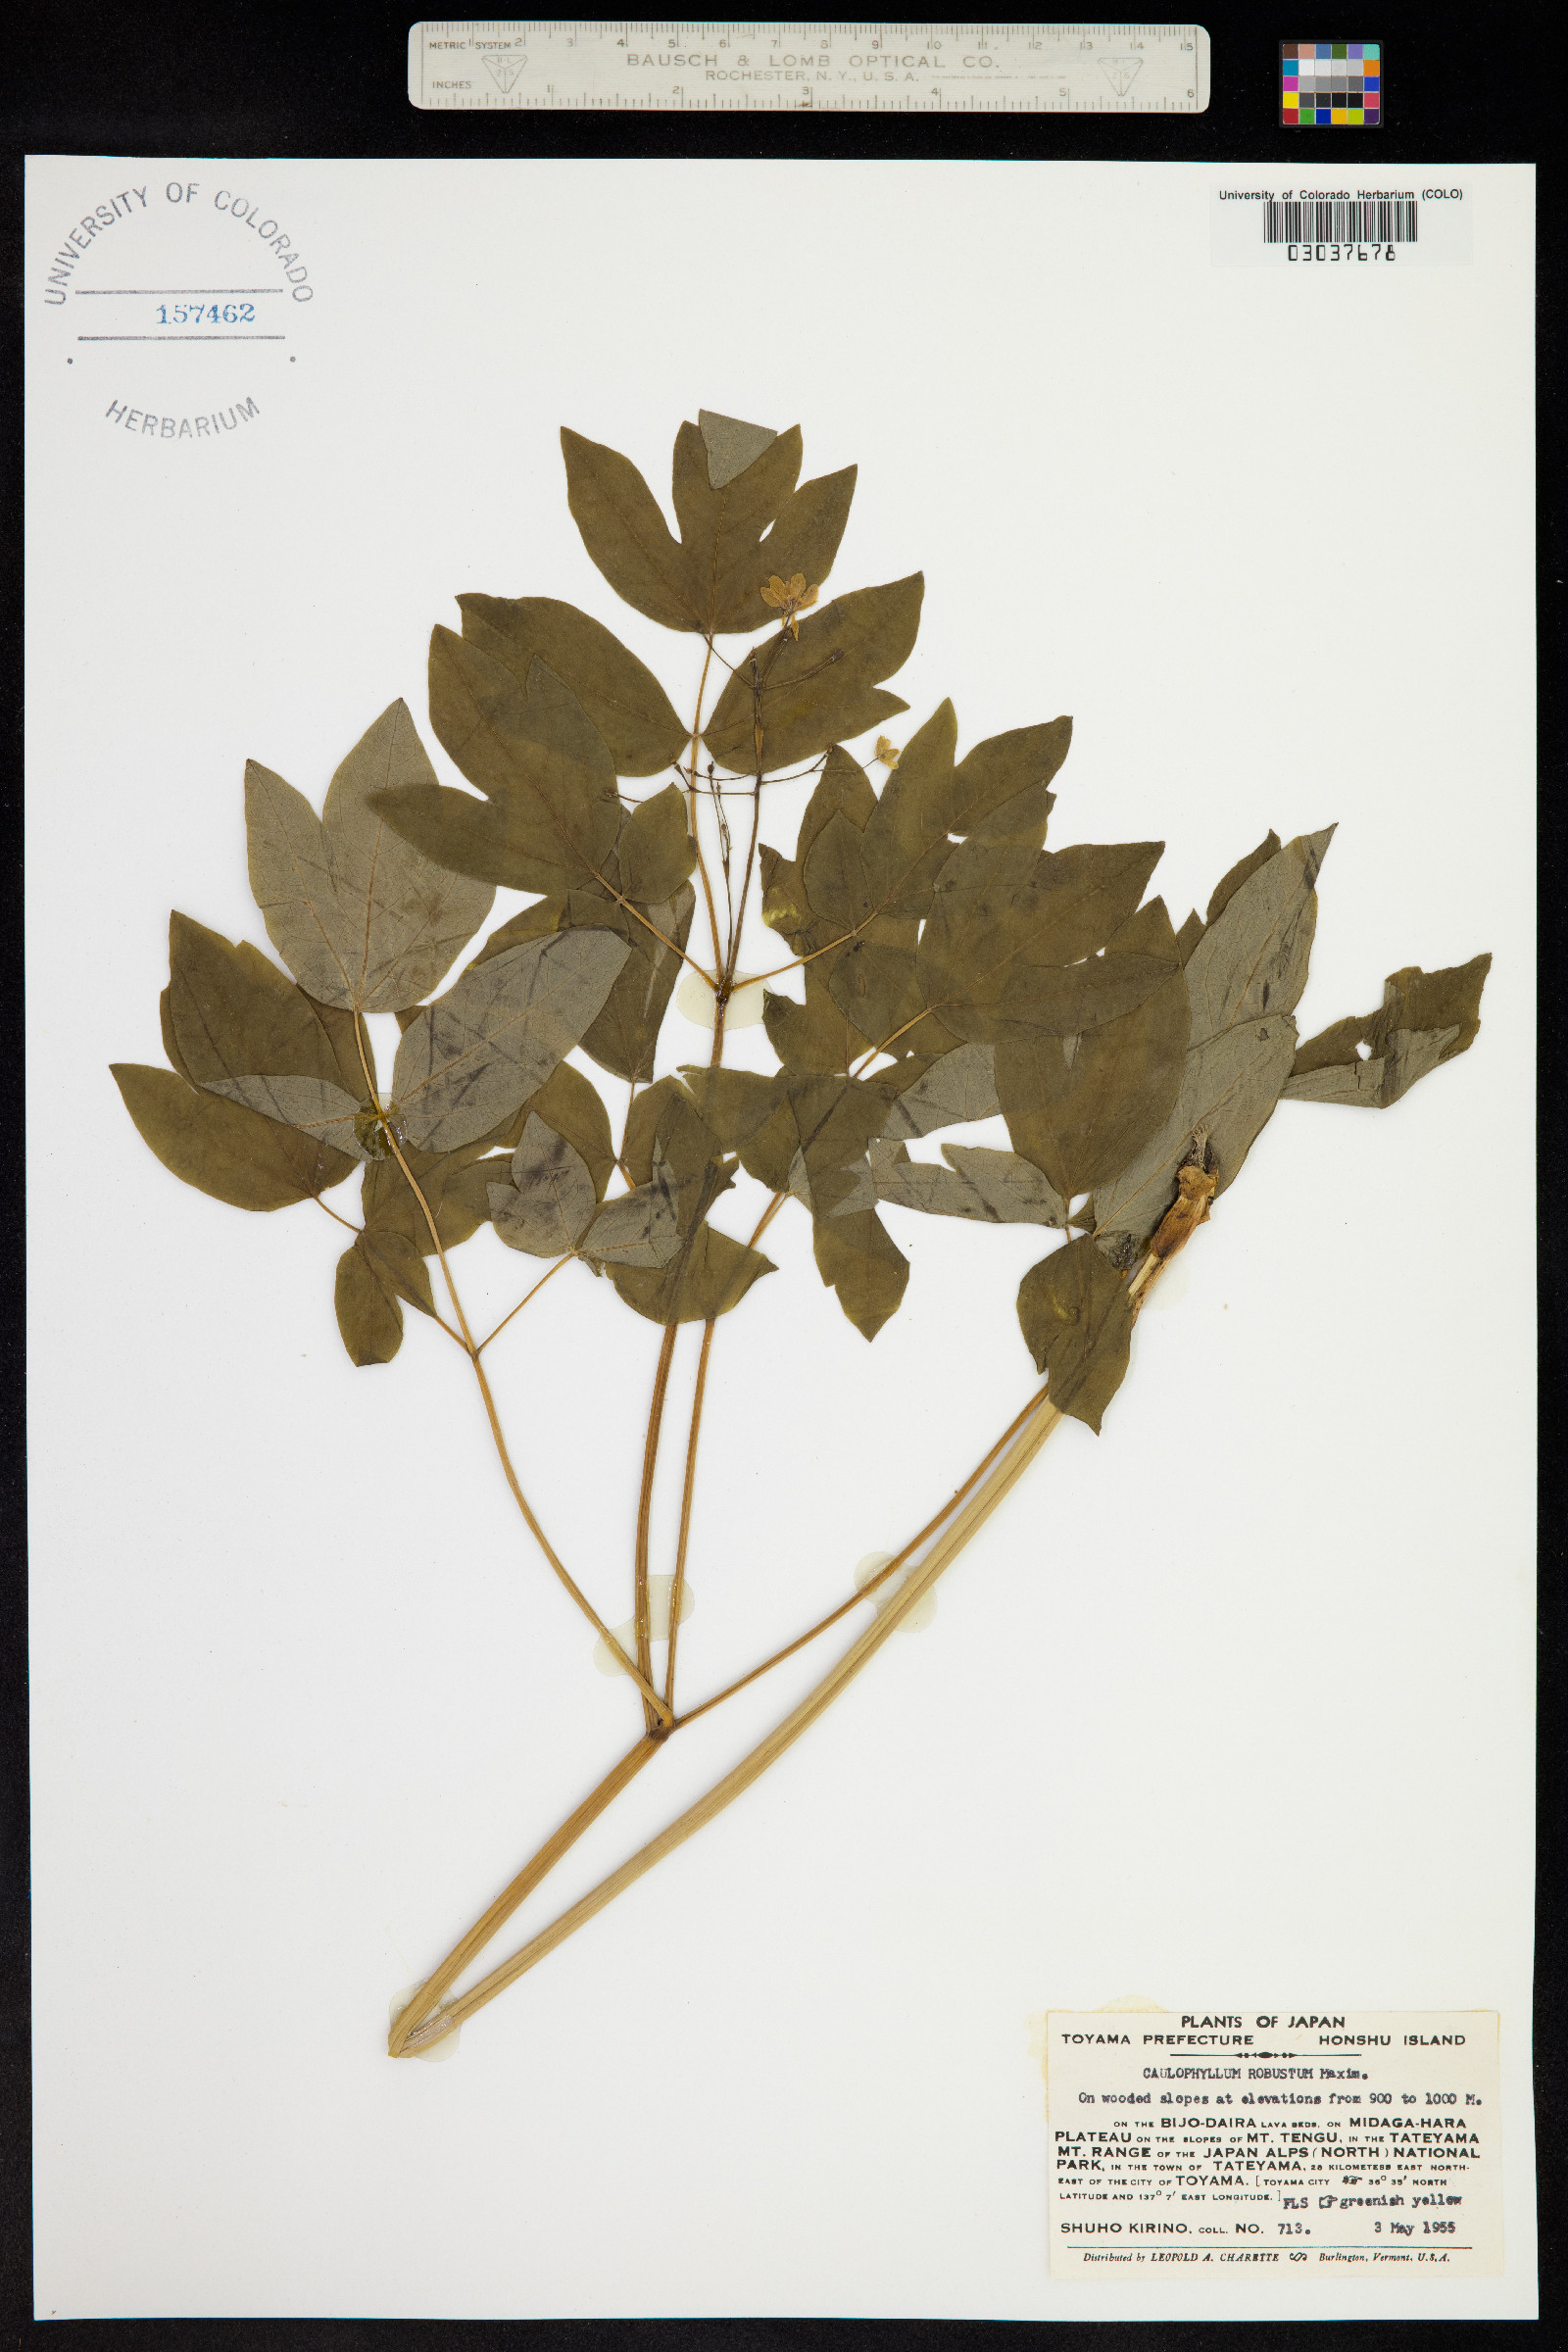 Caulophyllum robustum image